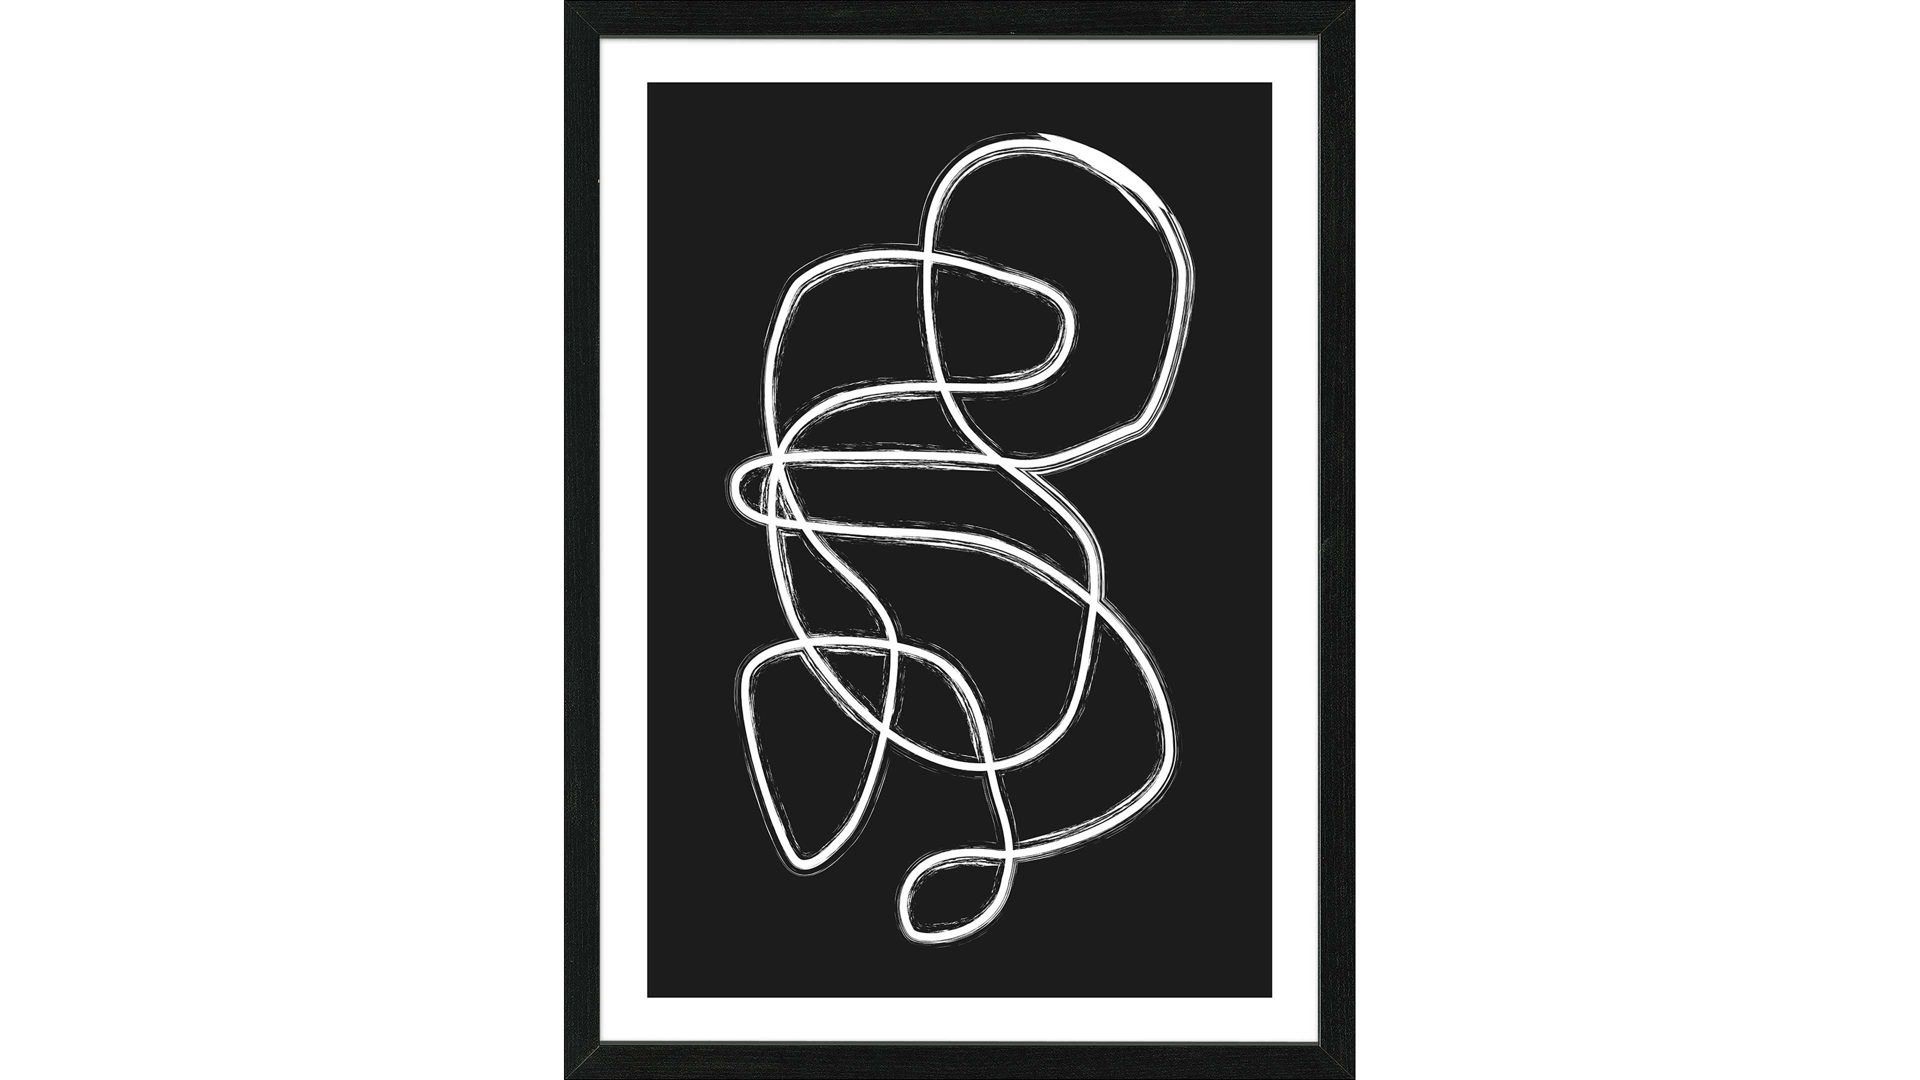 Kunstdruck Interliving BEST BUDDYS! aus Karton / Papier / Pappe in Weiß PRO®ART Kunstdruck Scandic Living Lines and shapes I - ca. 55 x 75 cm